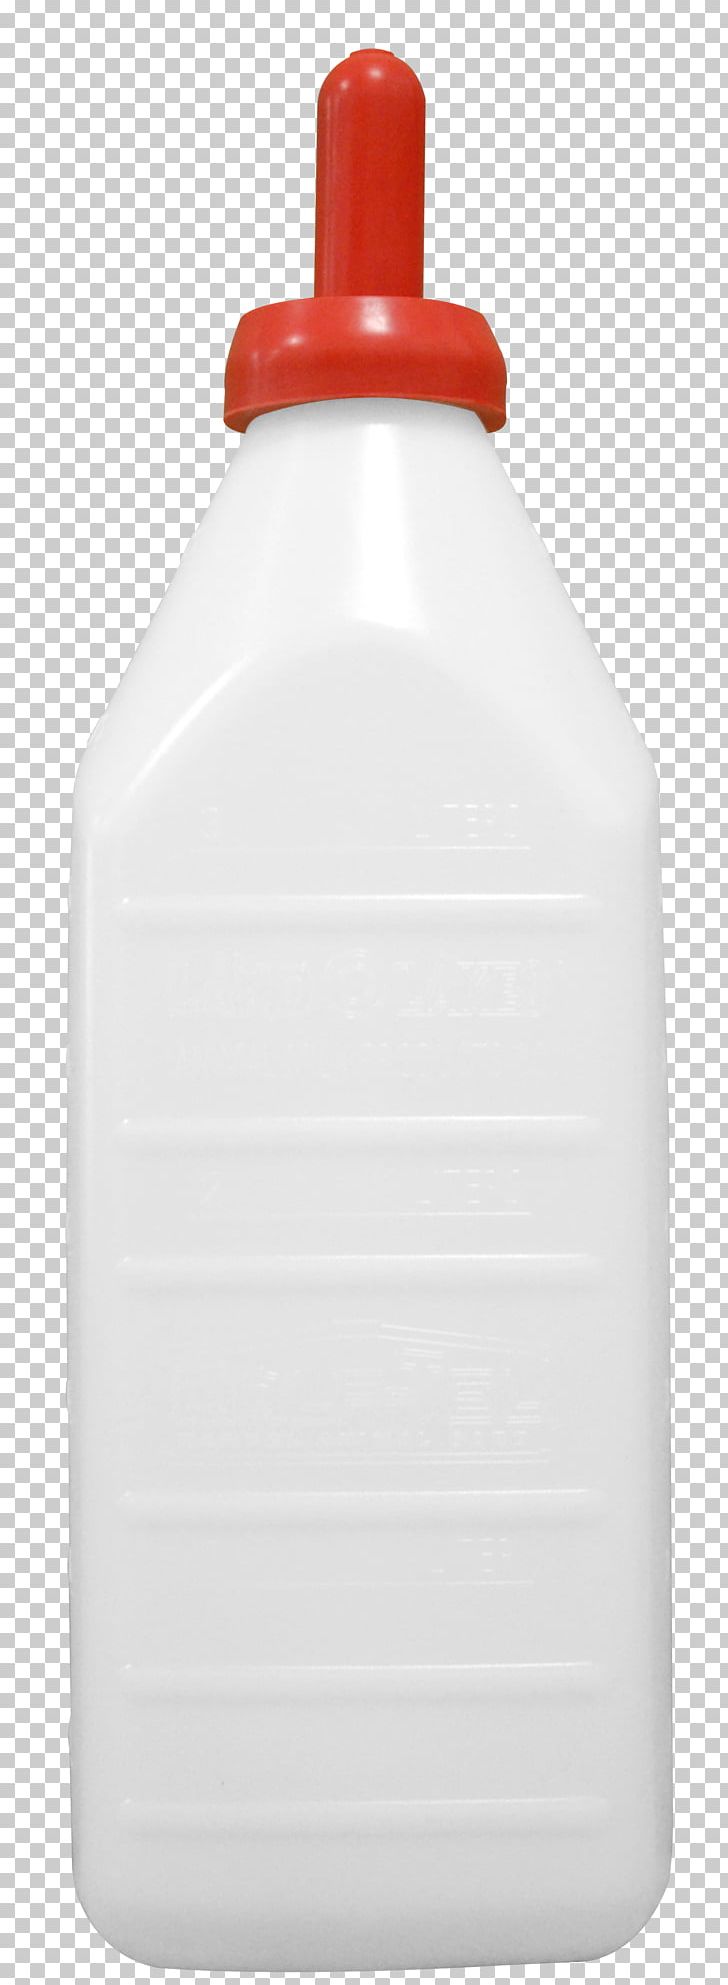 Water Bottles Plastic Bottle Liquid PNG, Clipart, Bottle, Drinkware, Liquid, Milk Bottle, Objects Free PNG Download